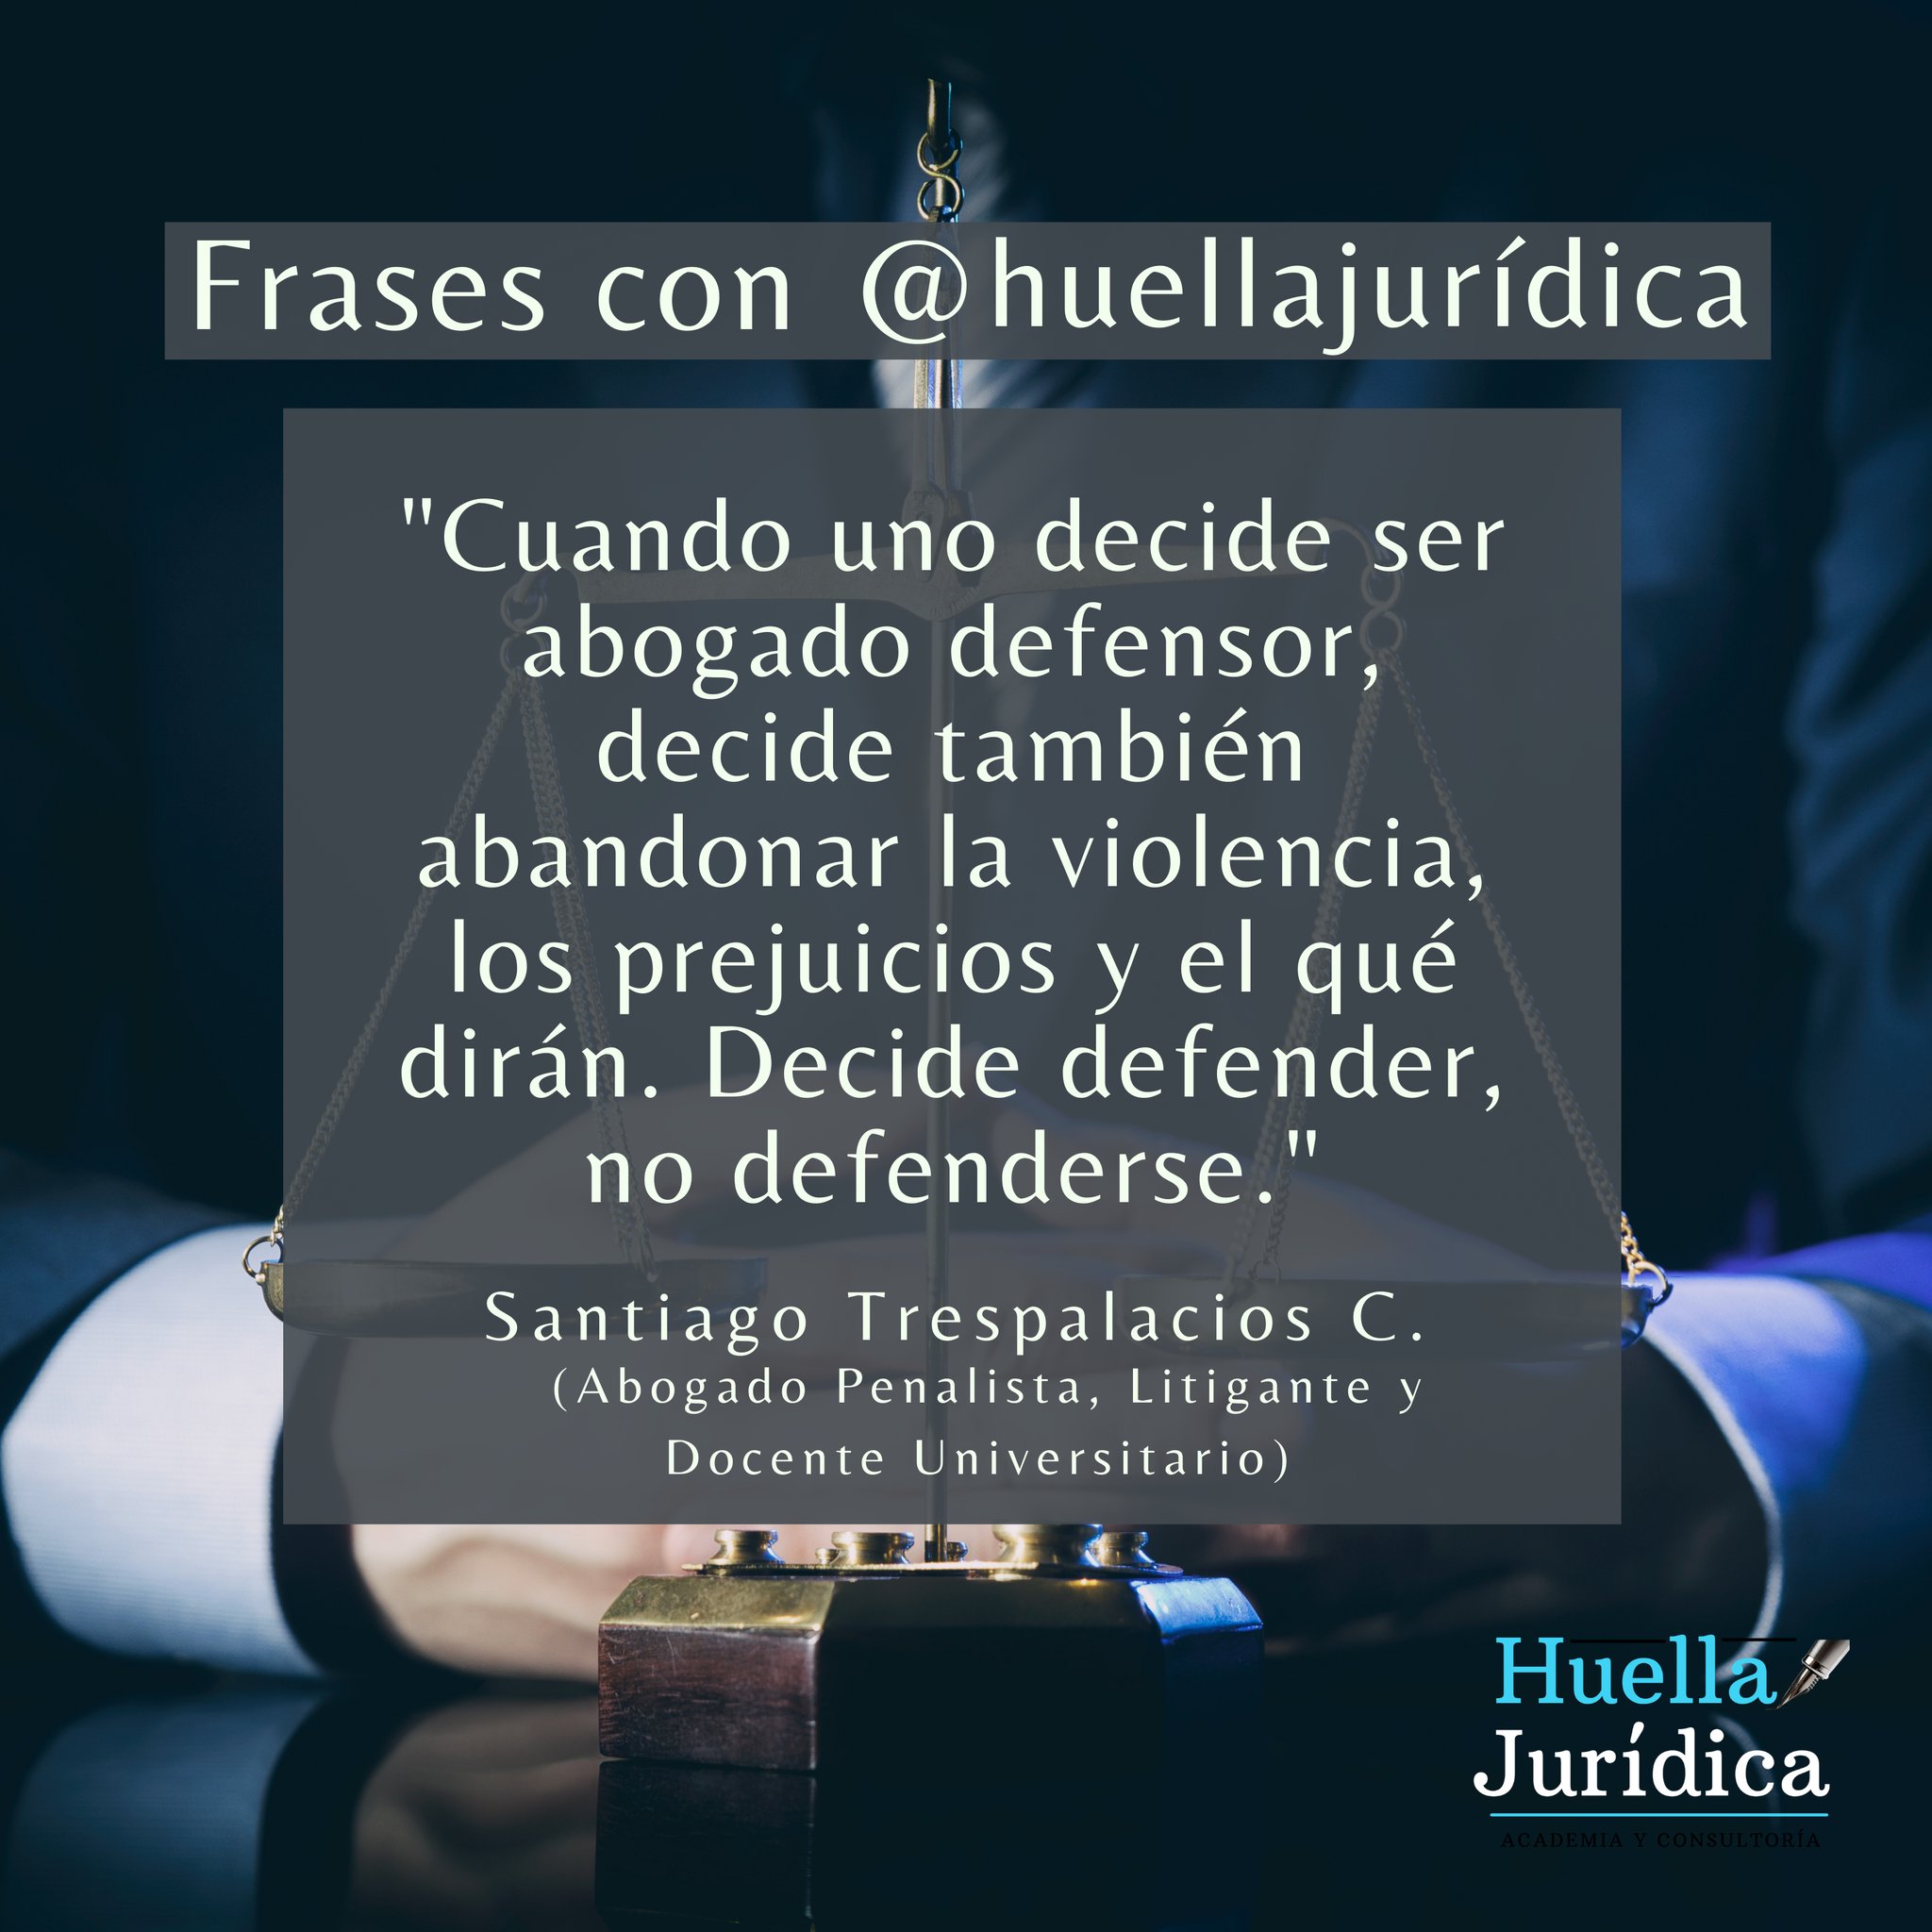 Huella Jurídica on Twitter: 